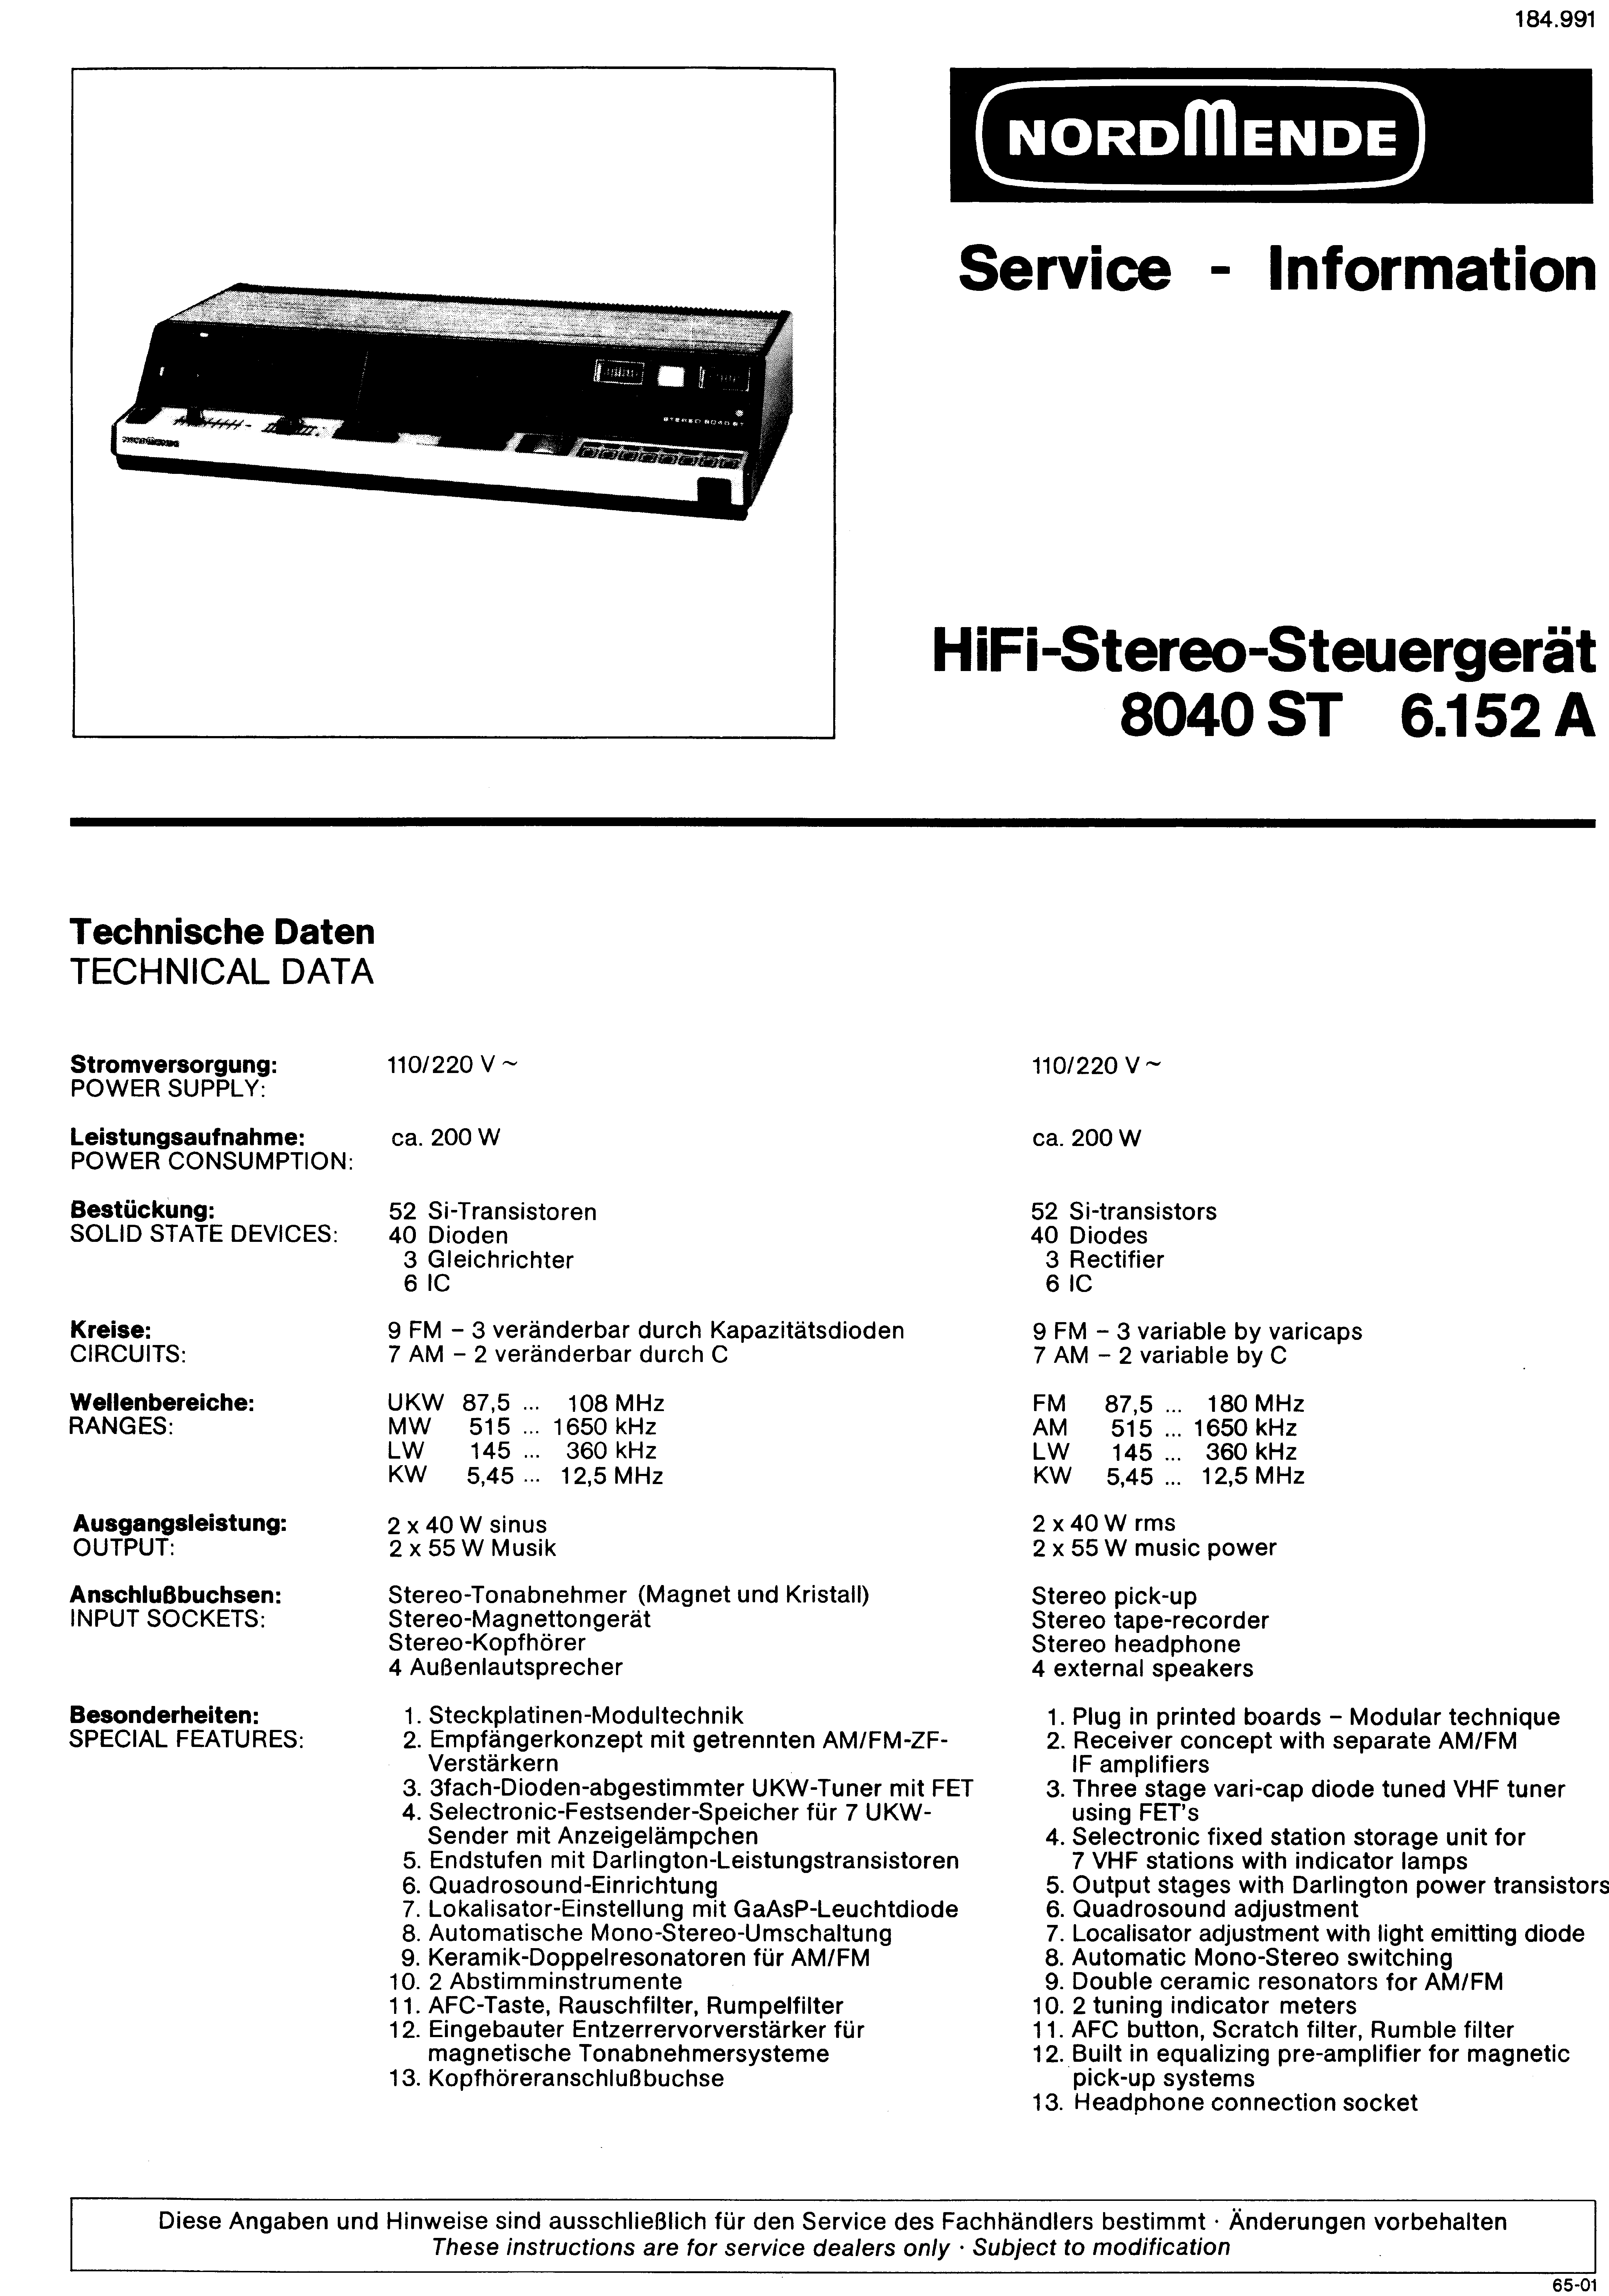 NORDMENDE HIFI-STEUERGERAET 8040 ST 6.152A SM service manual (1st page)